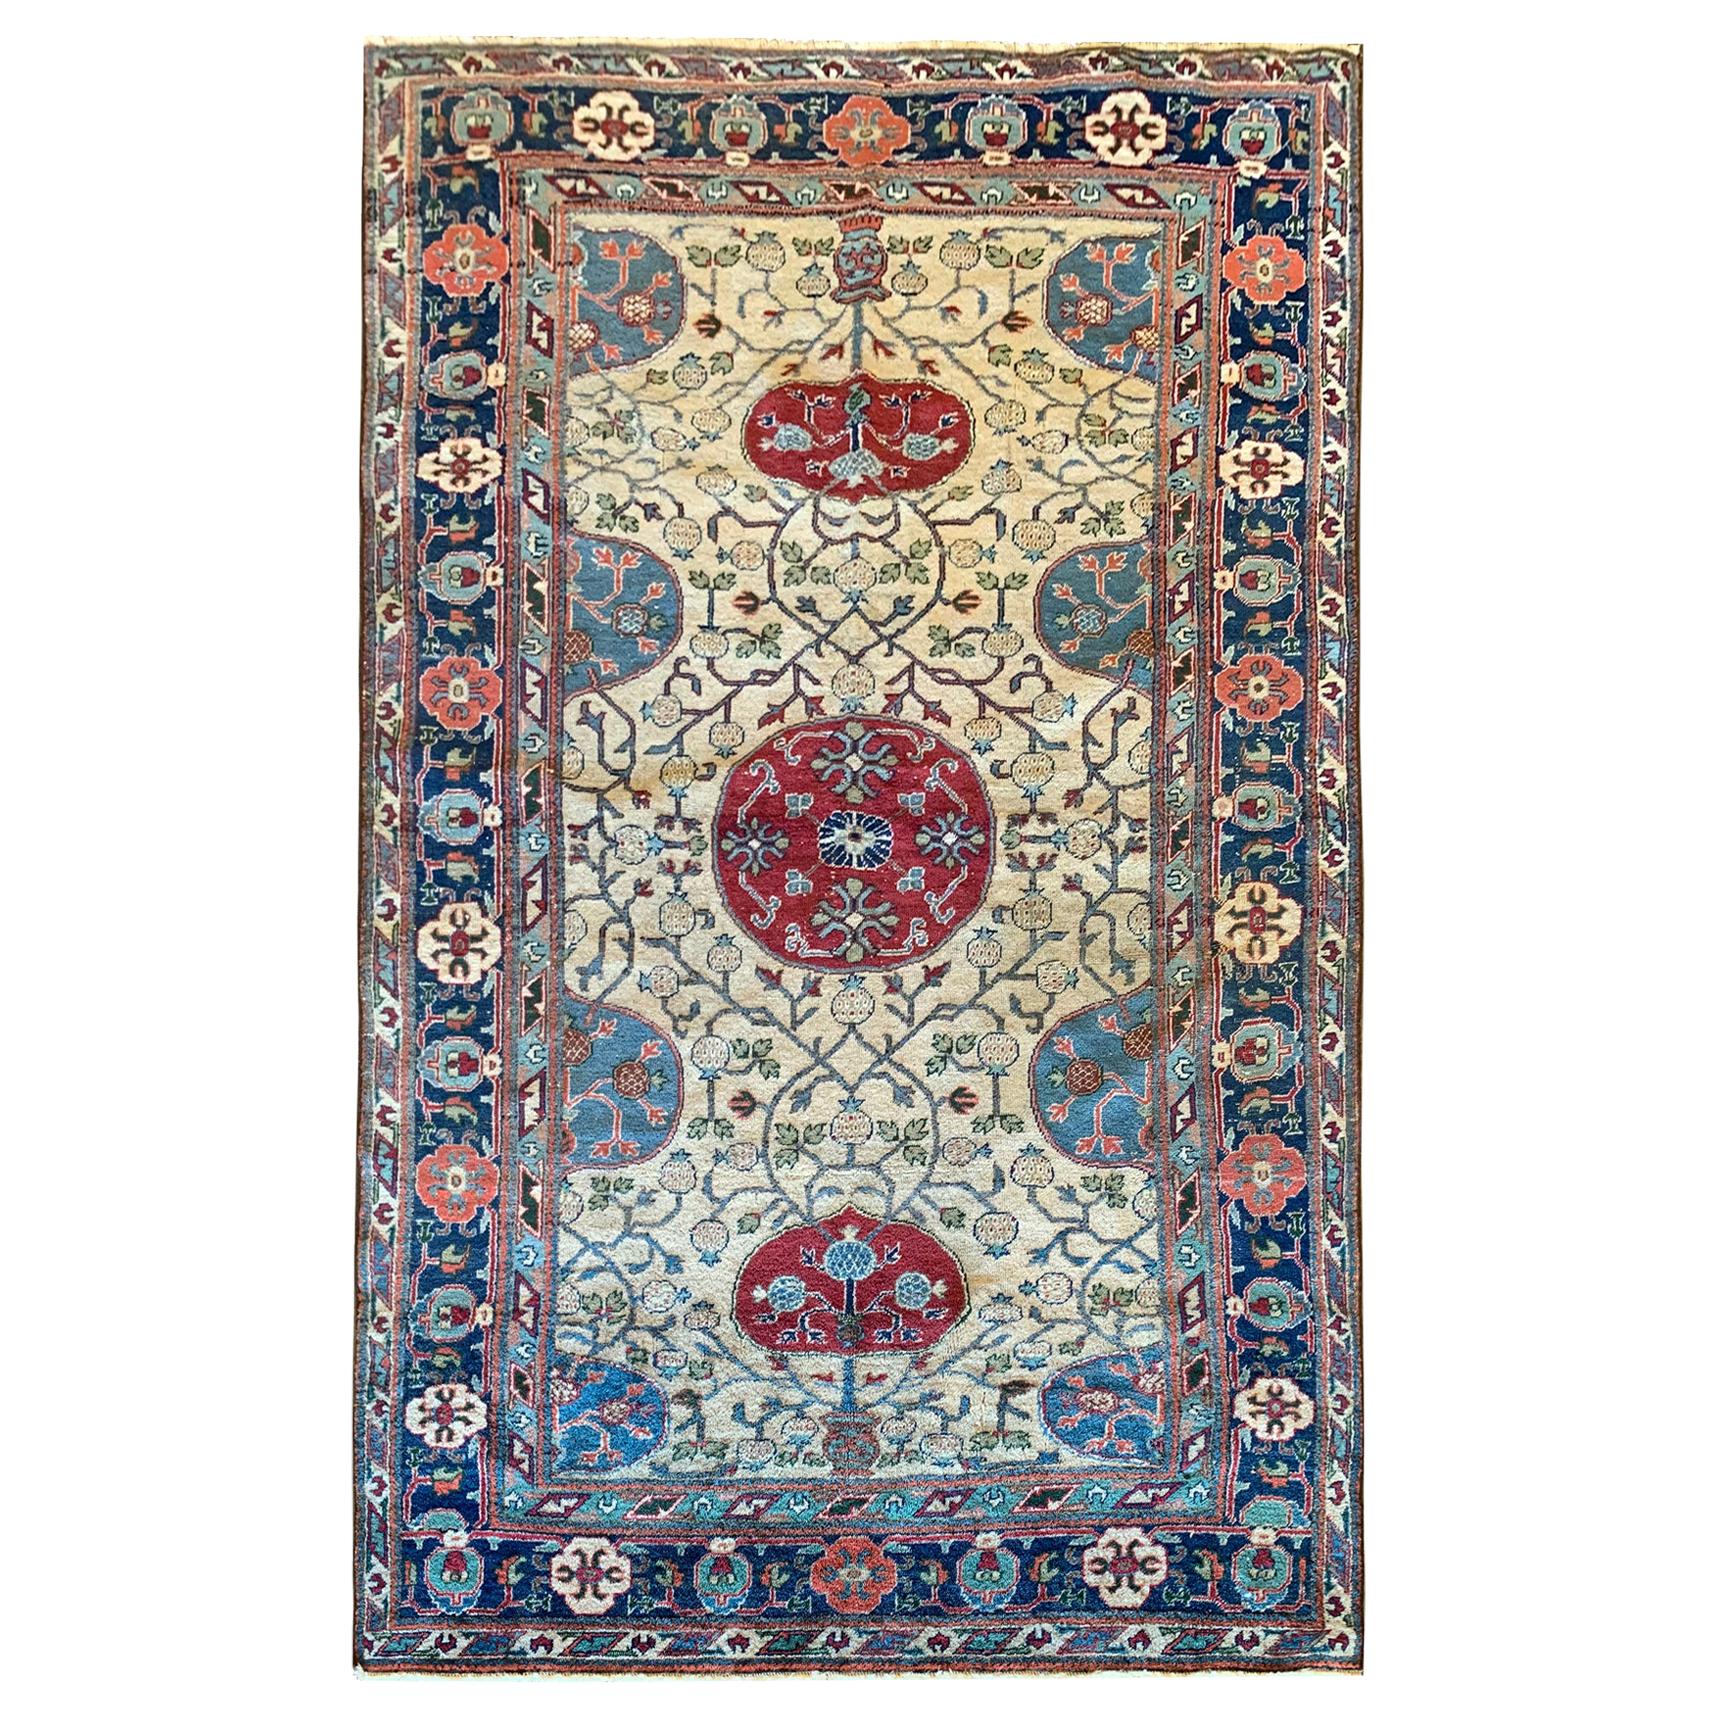 Antique Rugs Central Asian Khotan Carpet Handmade Oriental Area Rug For Sale